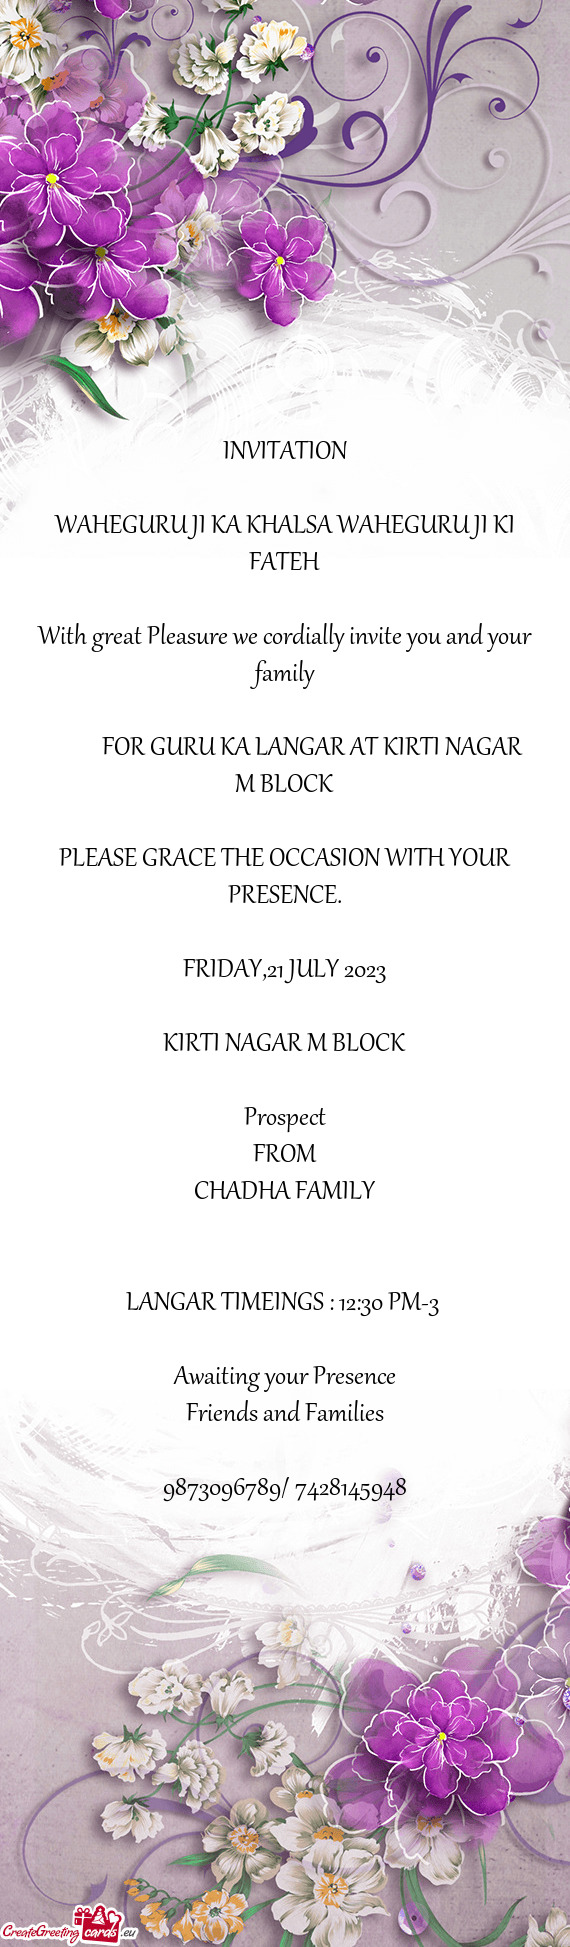 FOR GURU KA LANGAR AT KIRTI NAGAR M BLOCK